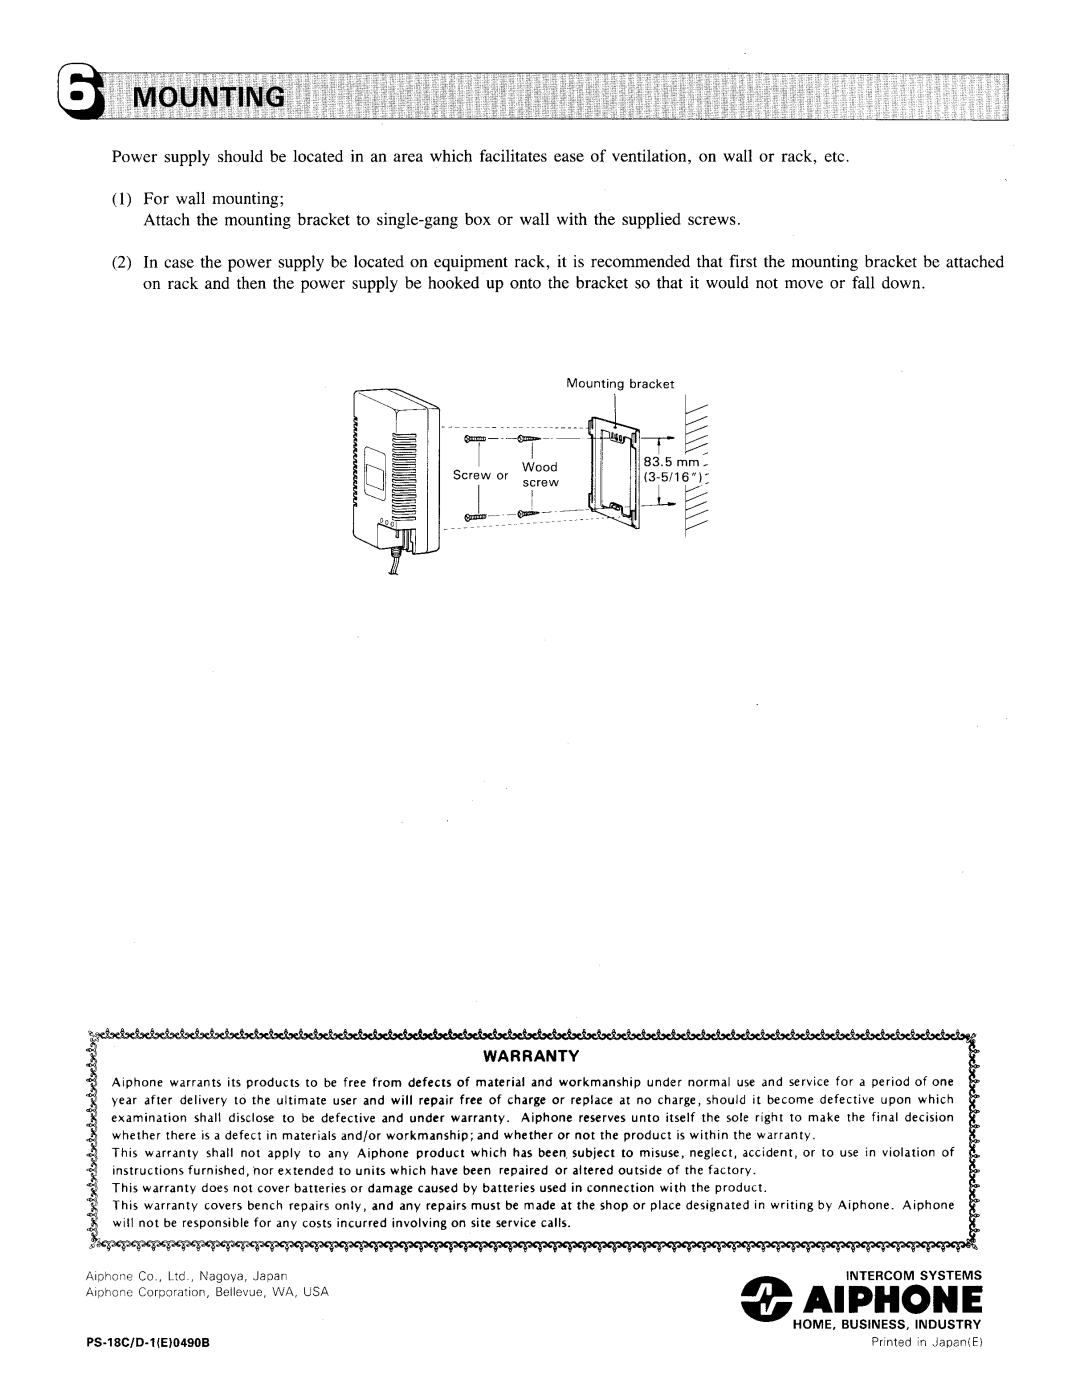 Aiphone PS-18D, PS-18C manual 